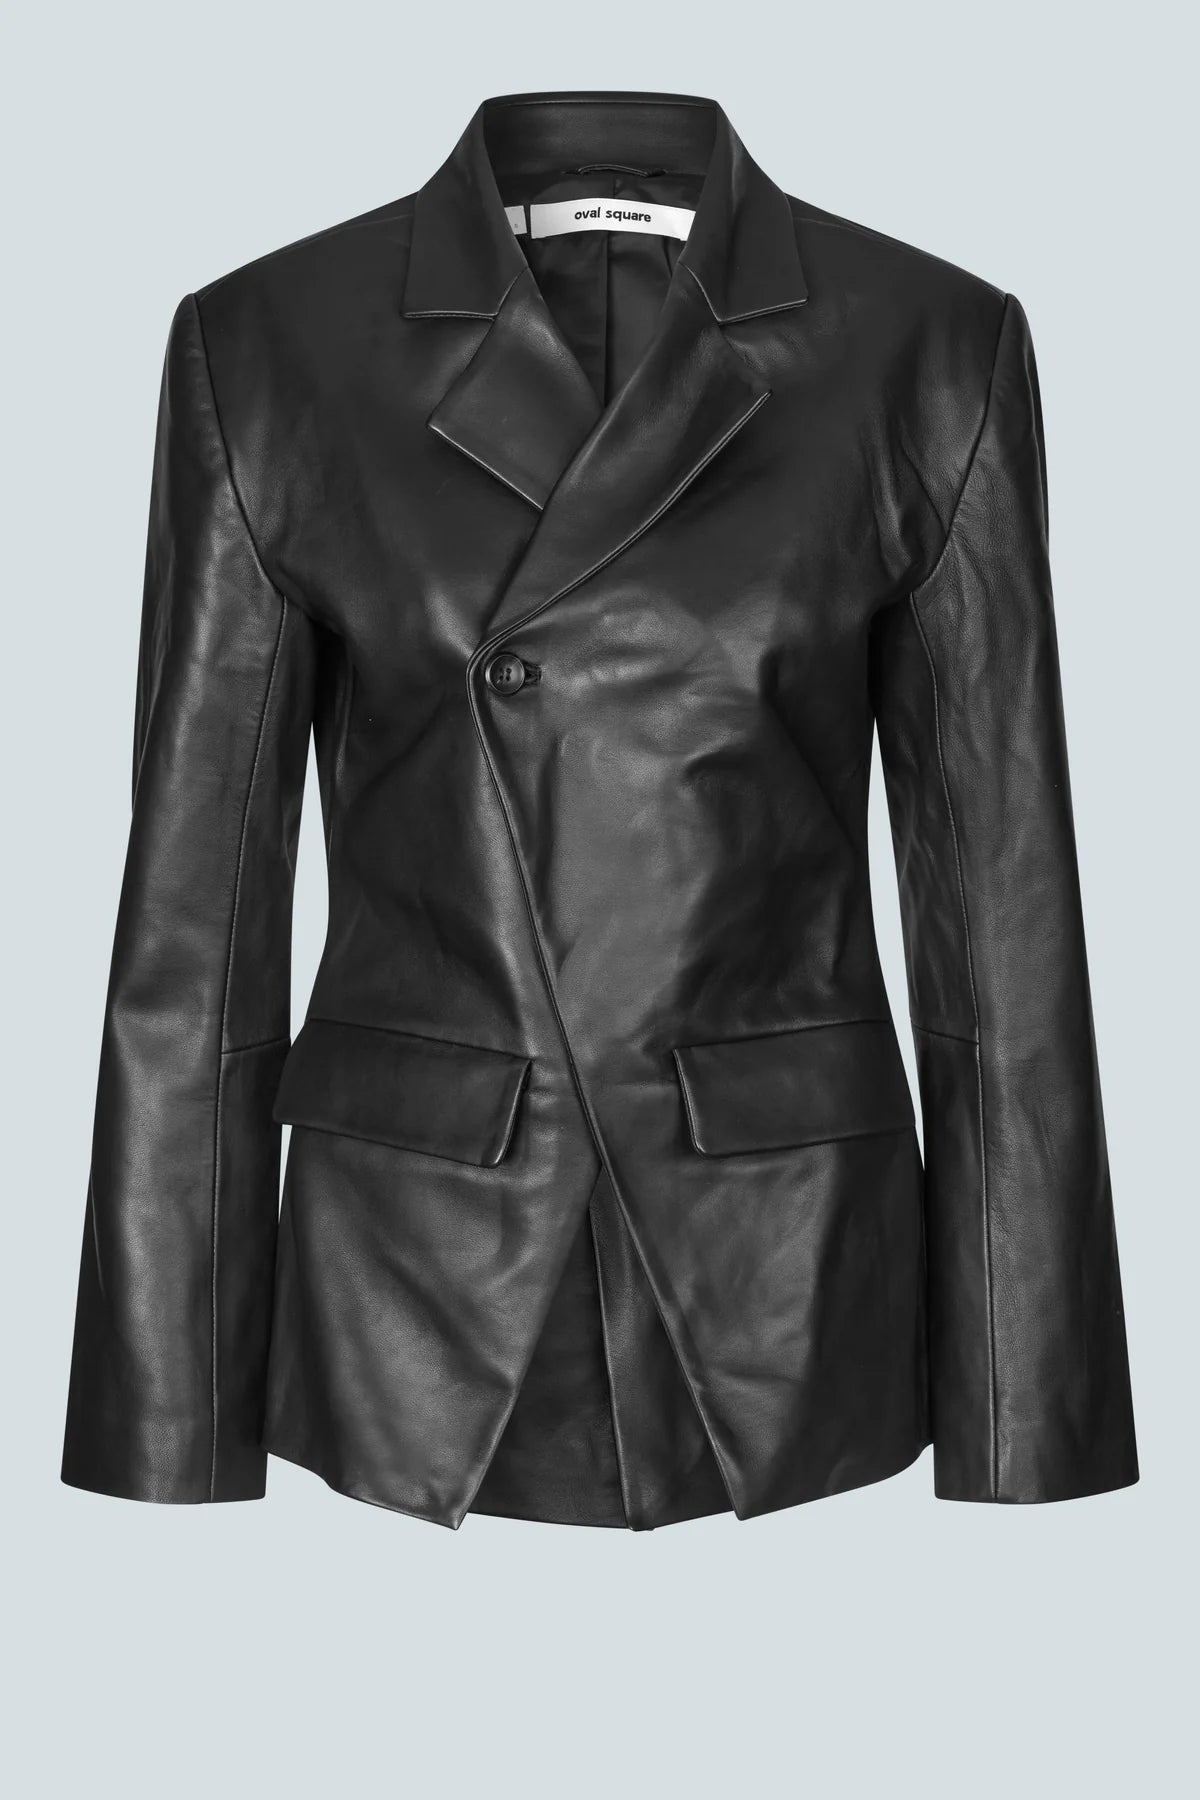 Oval Square | Luxury Leather Blazer